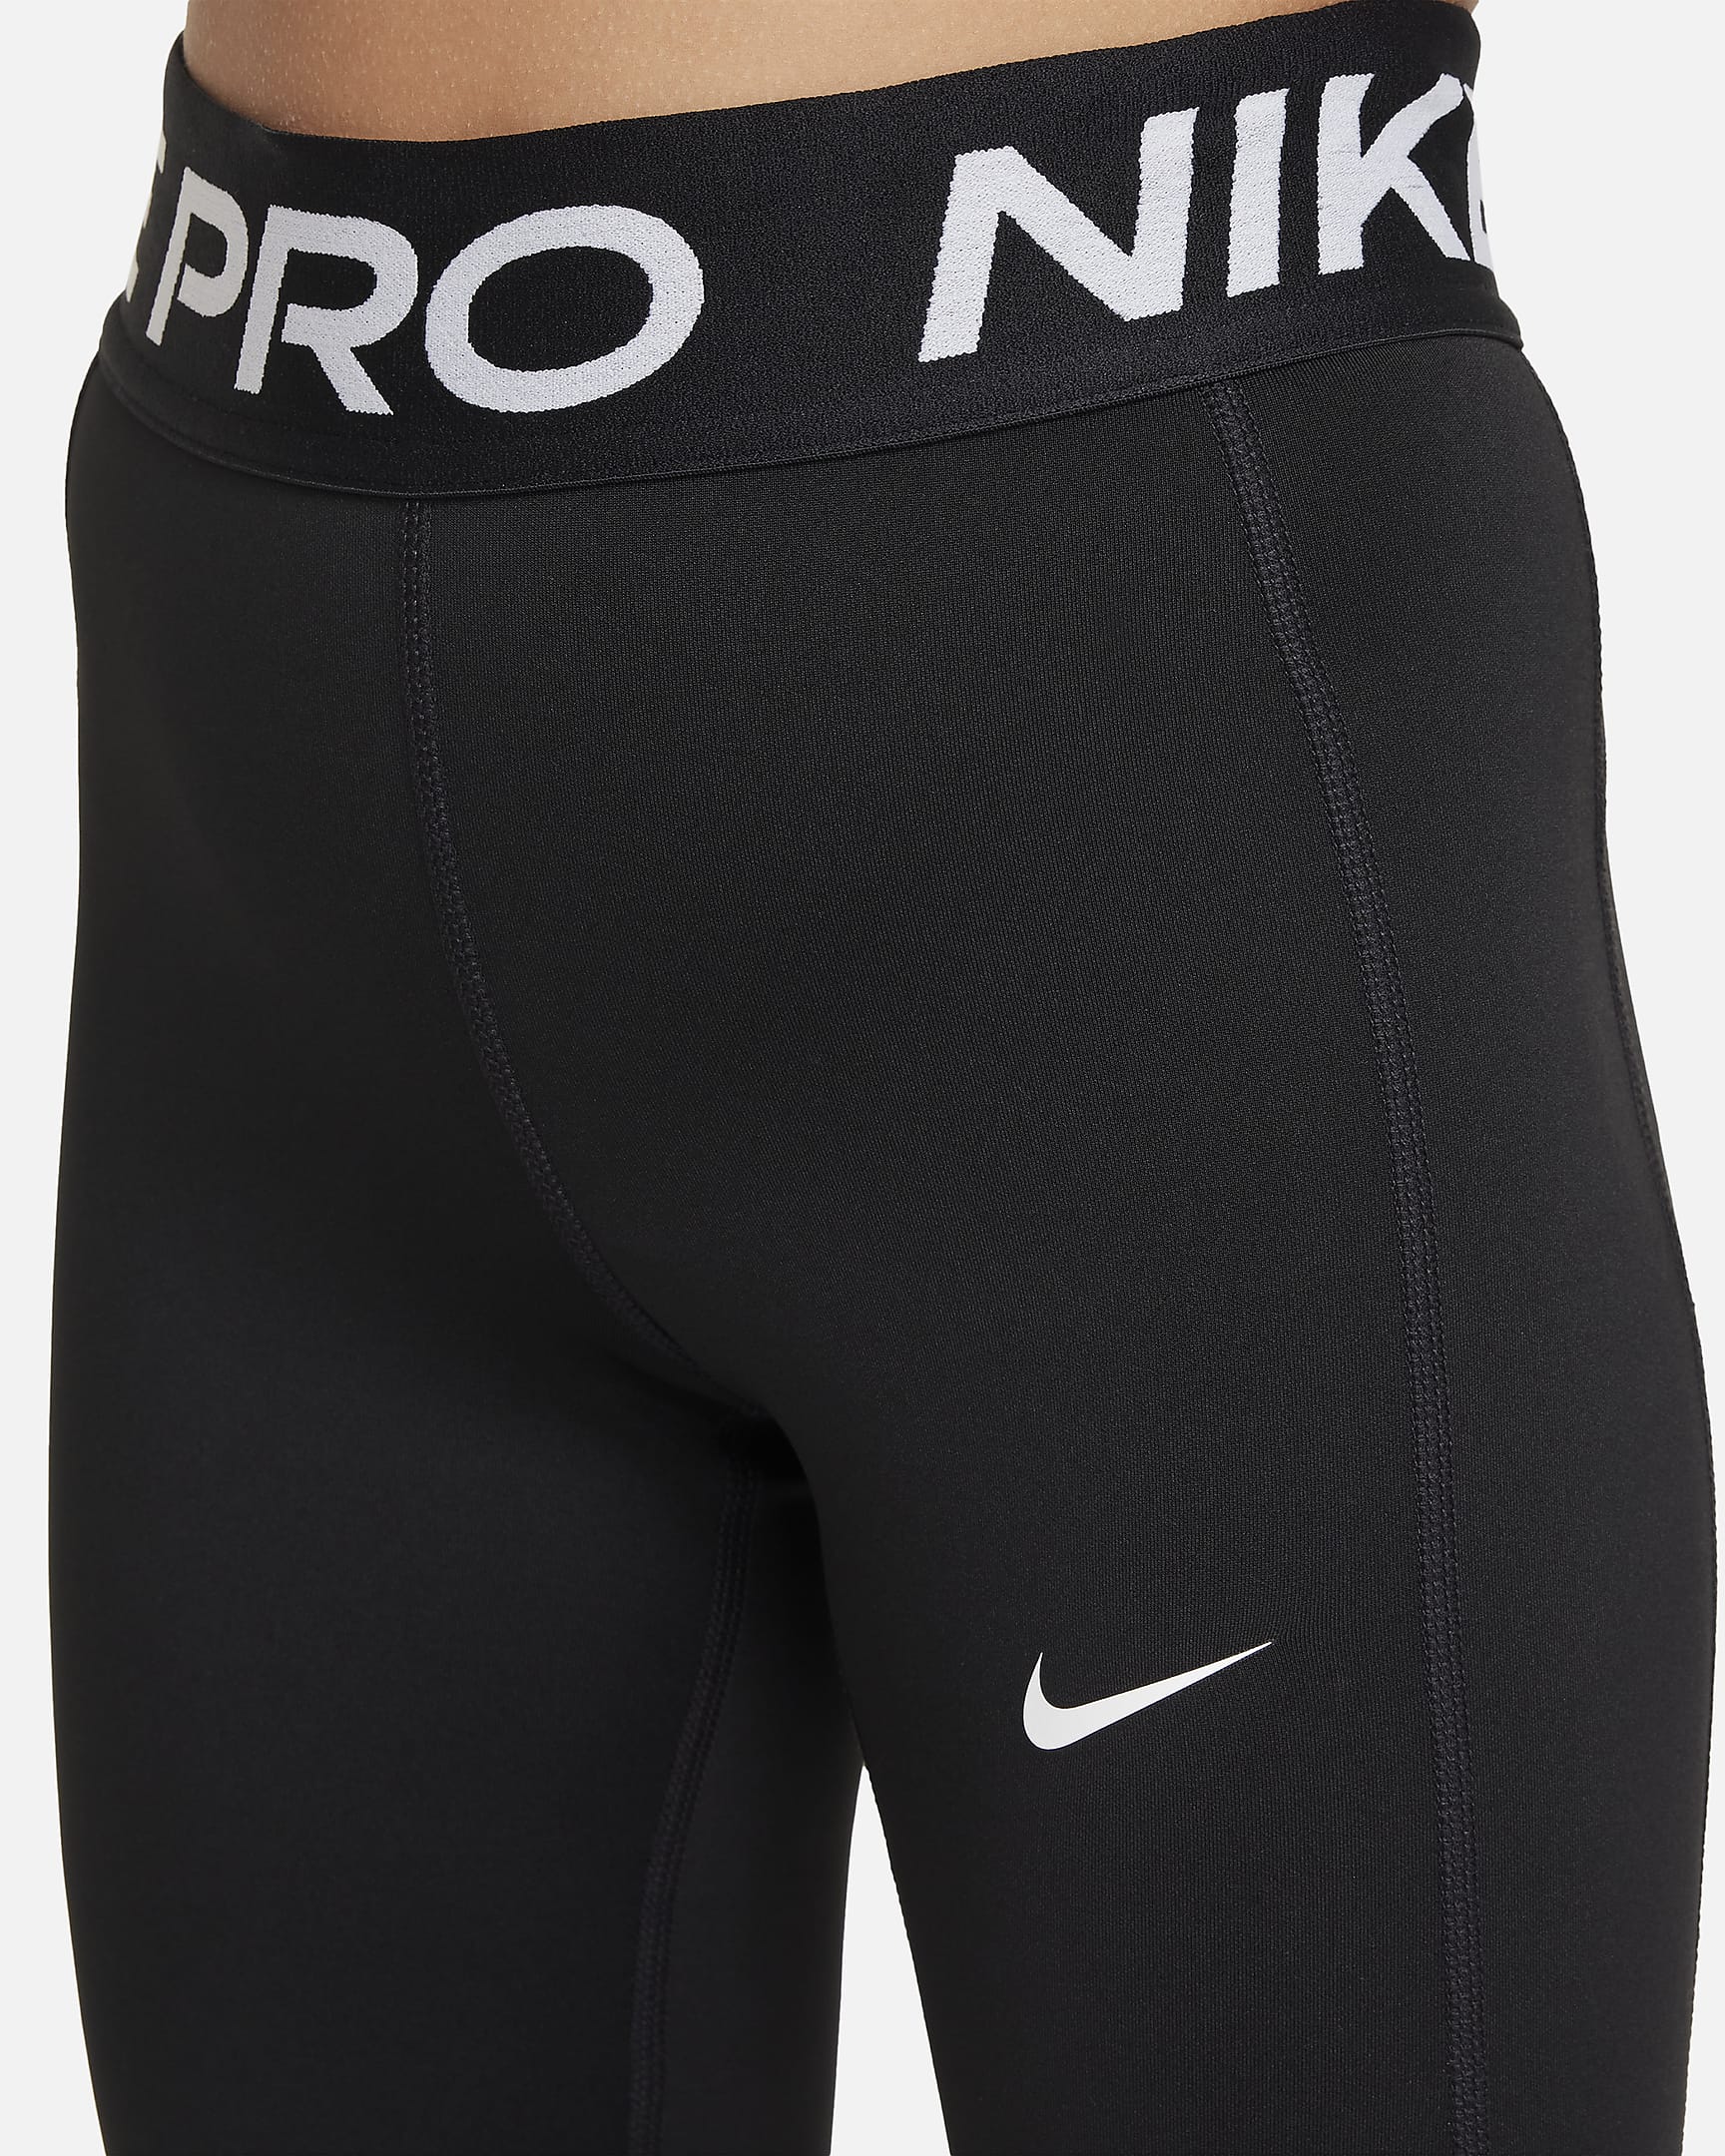 Nike Pro Leak Protection: Period Girls' Dri-FIT Leggings - Black/White